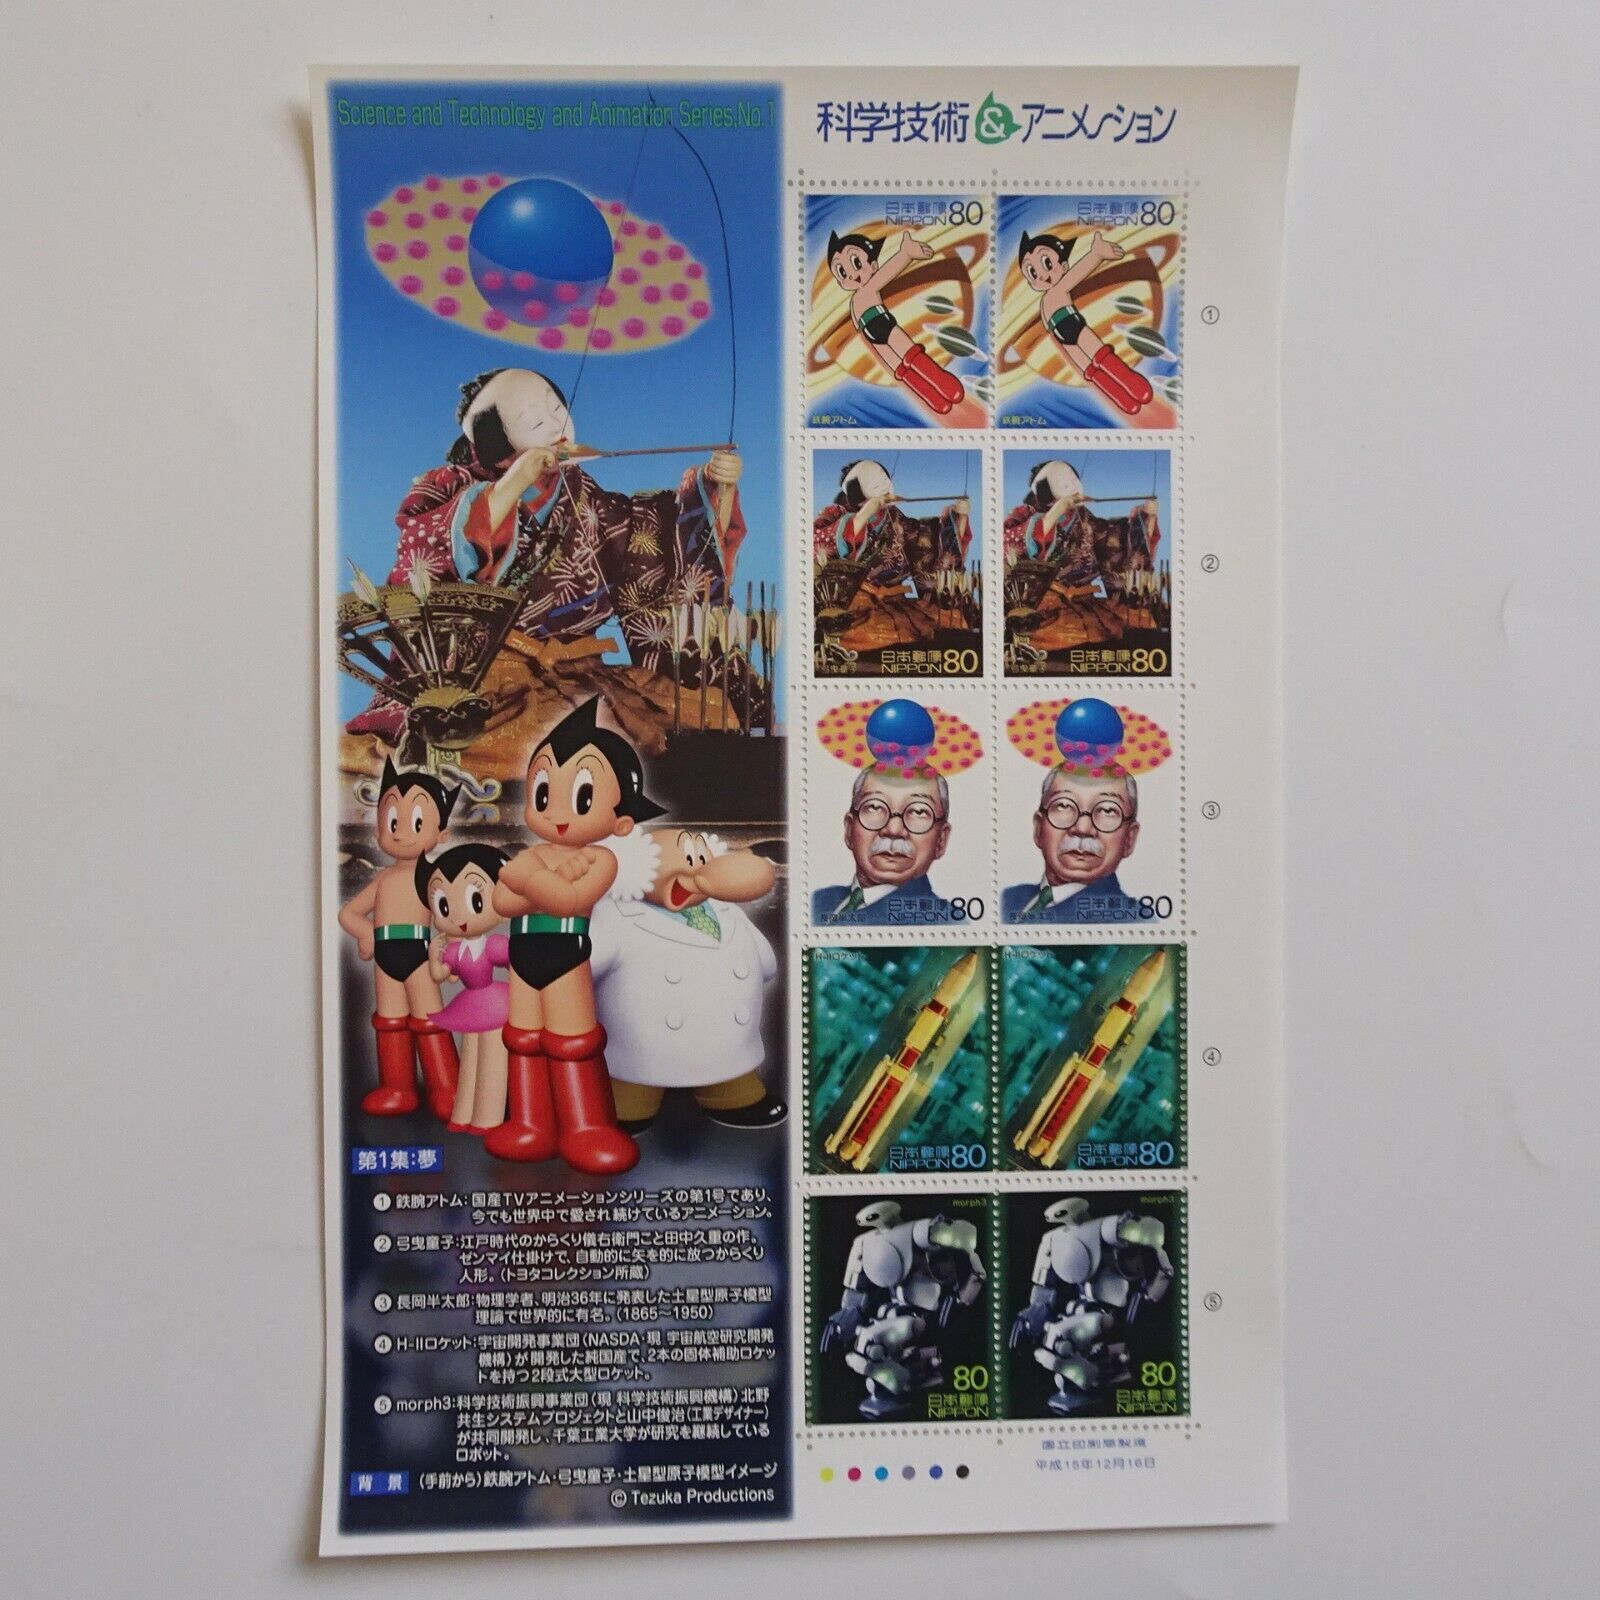 Science & Technology & Animation #1 Astro Boy 2 kind Stamp Sheet + Flyer 2003.12 Без бренда - фотография #2